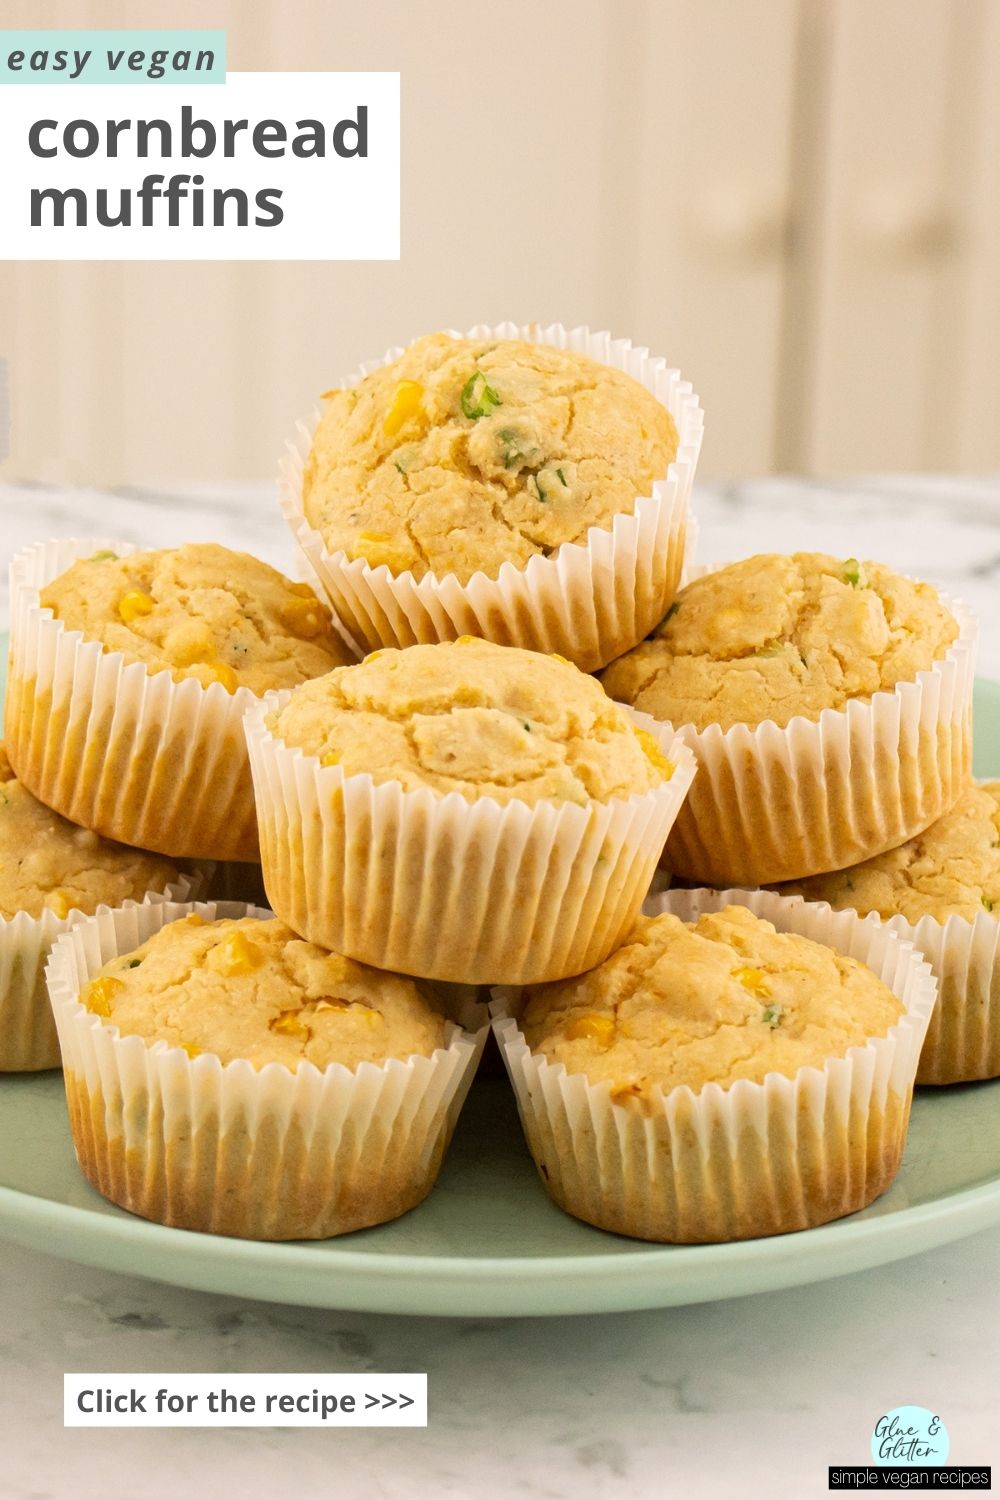 vegan cornbread muffins piled onto a blue plate, text overlay